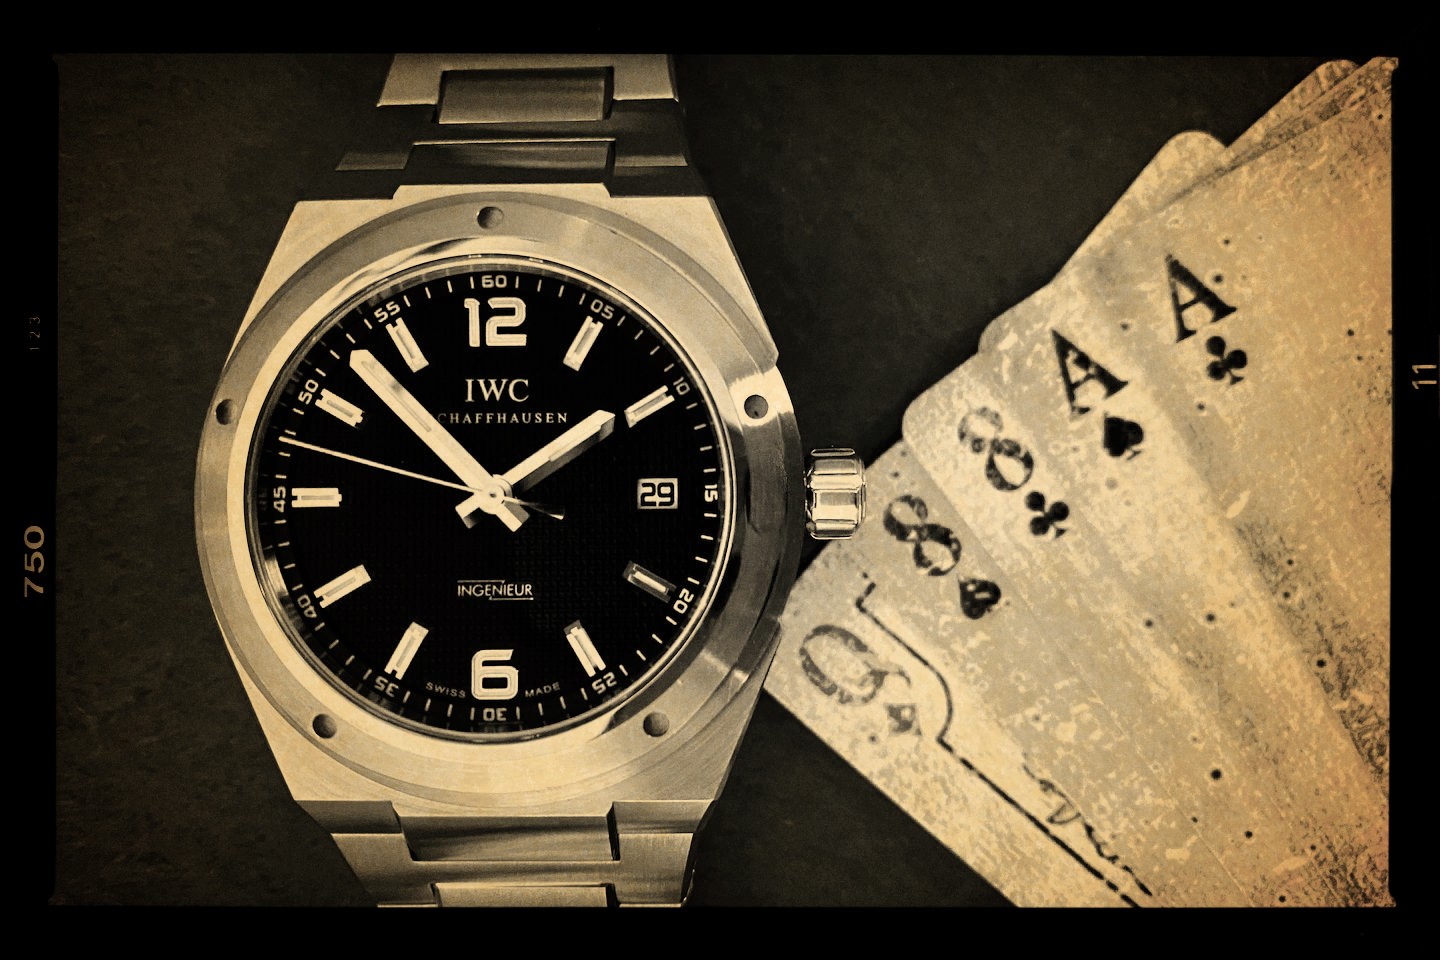 Post your 12 6 watches | WatchUSeek Watch Forums